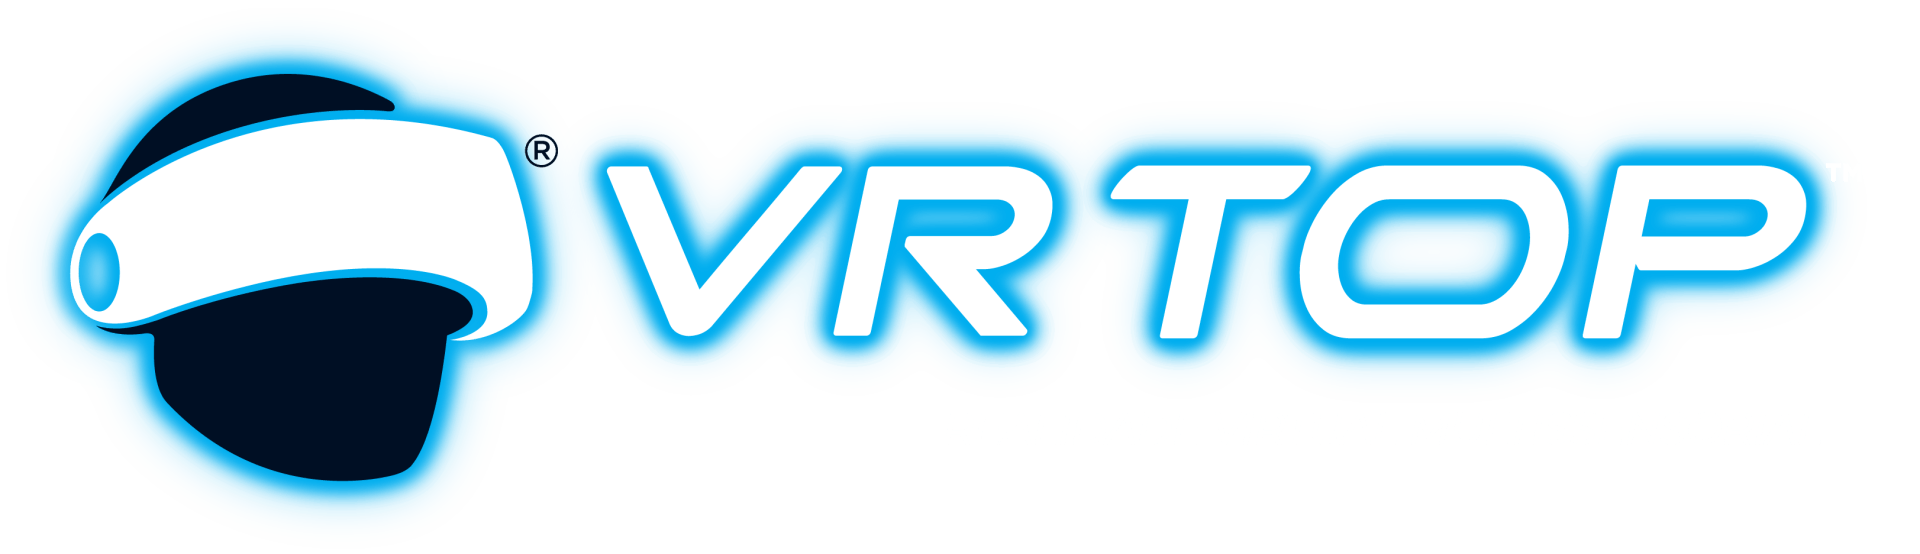 VR TOP - Realidade Virtual Multissensorial